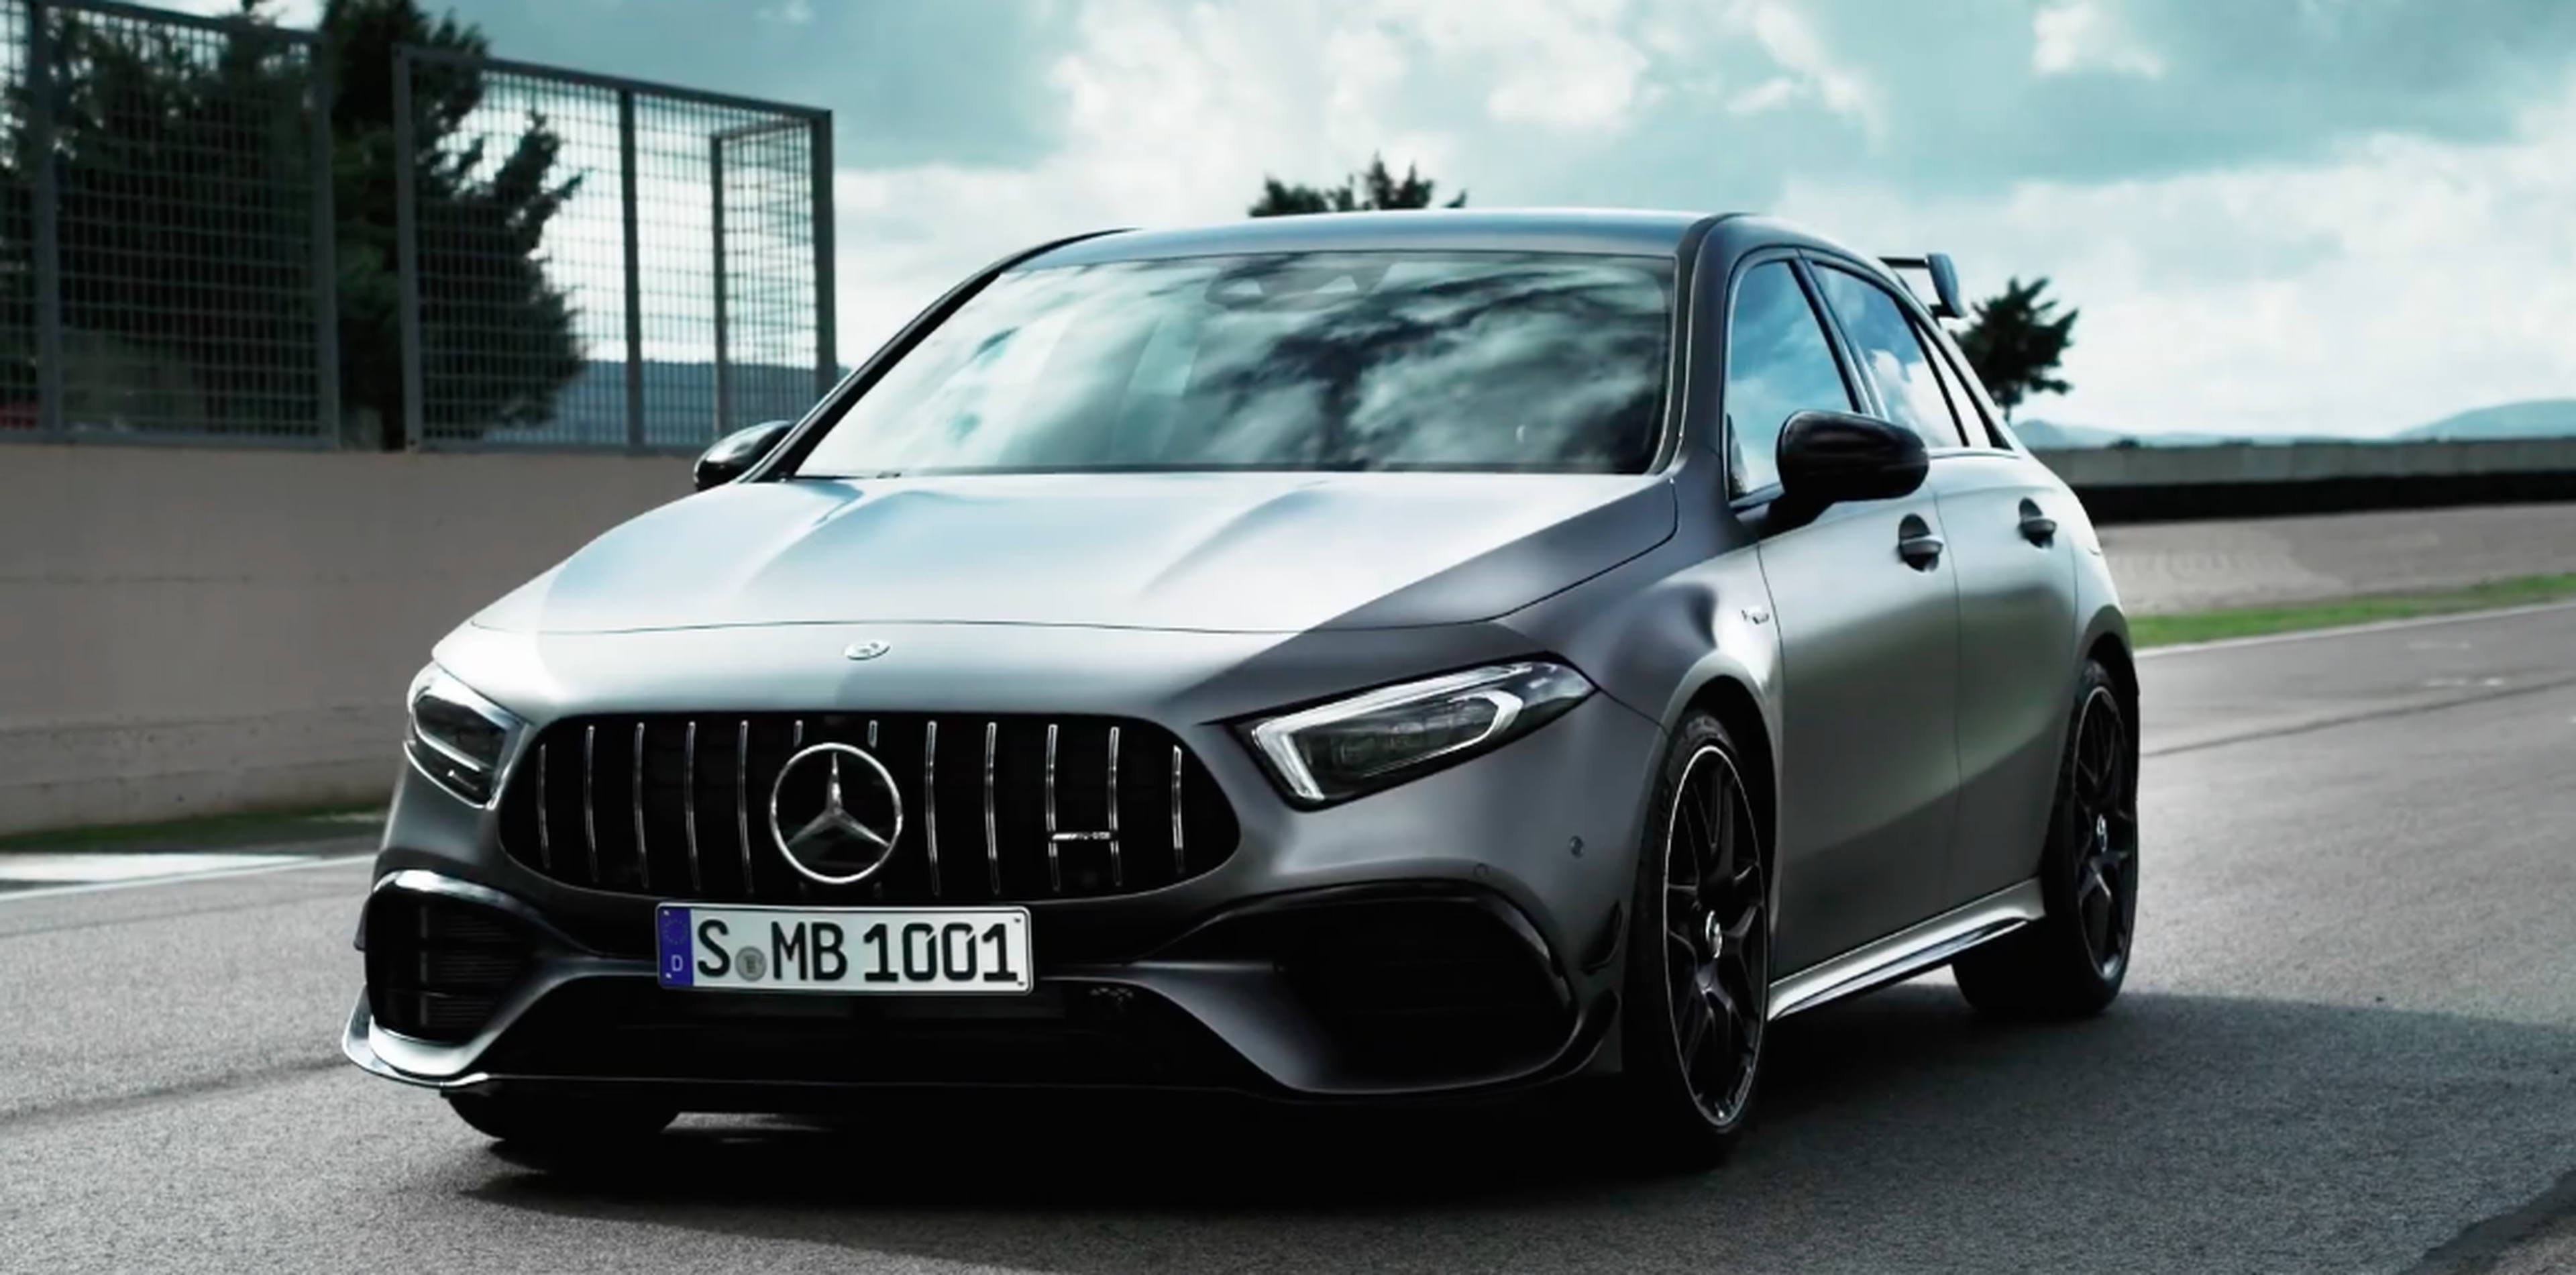 VÍDEO: Mercedes-AMG A 45 2019, todos los detalles de la bestia